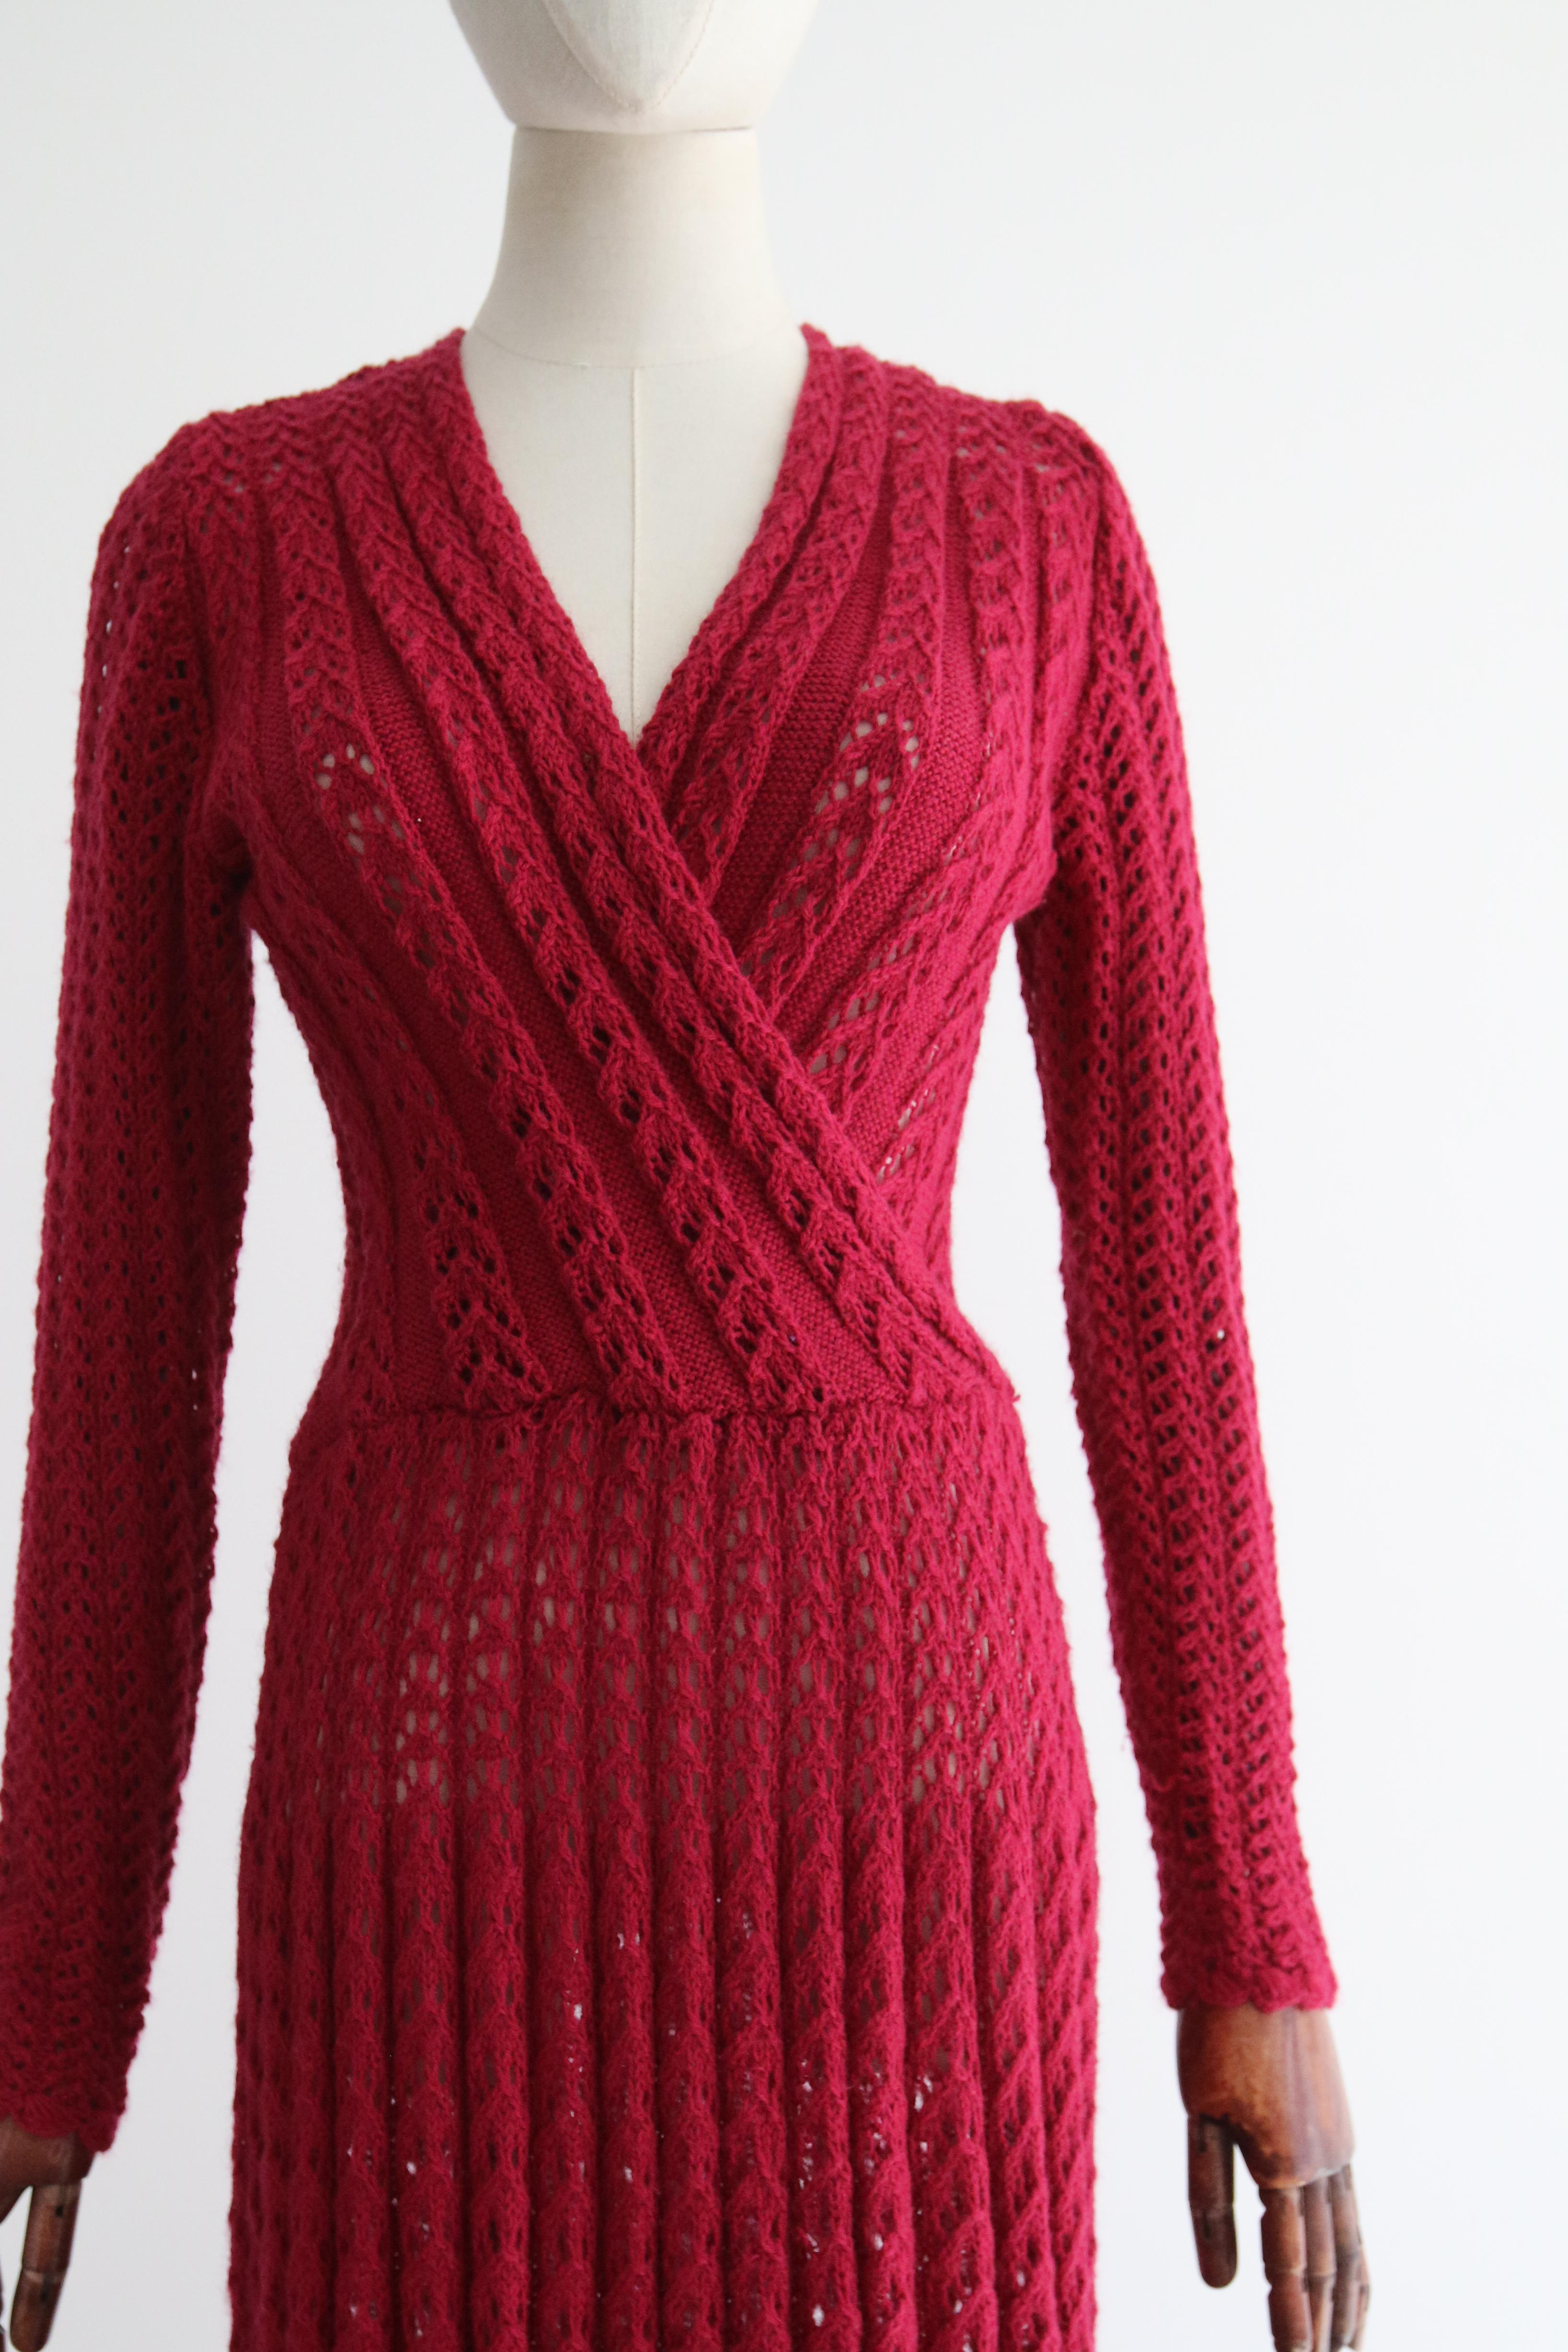 Red Vintage 1940's Magenta Knitted Dress UK 10-12 US 6-8 For Sale